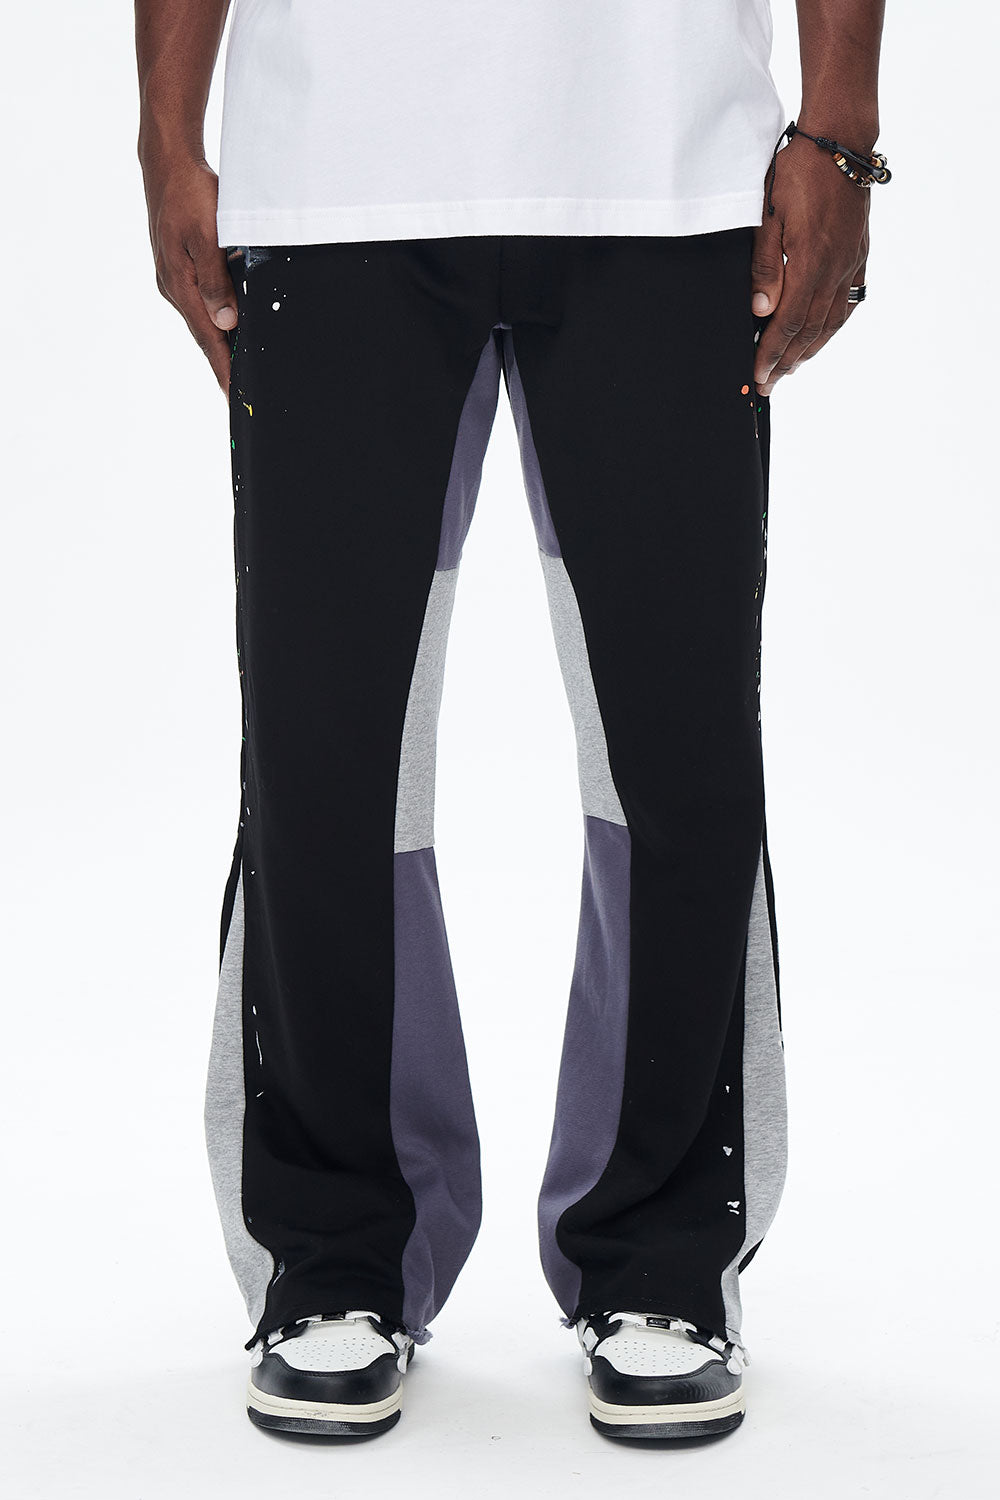 Gingtto Men's Bell-Bottom Pants: Classic Style, Modern Comfort